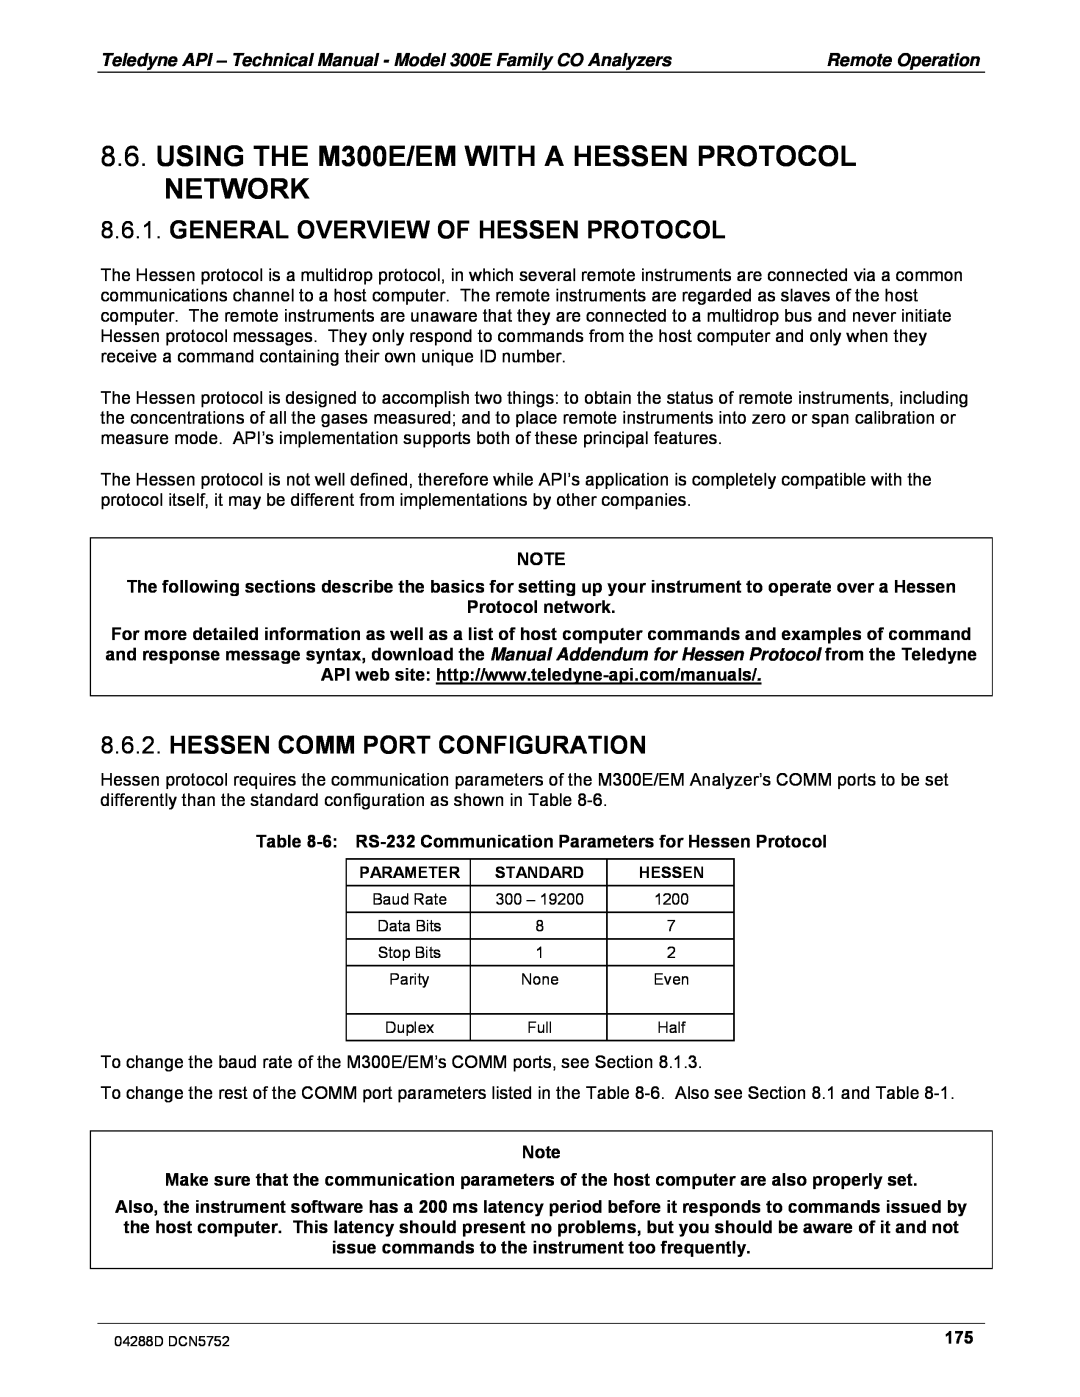 Teledyne M300EM operation manual General Overview Of Hessen Protocol, Hessen Comm Port Configuration, Protocol network 